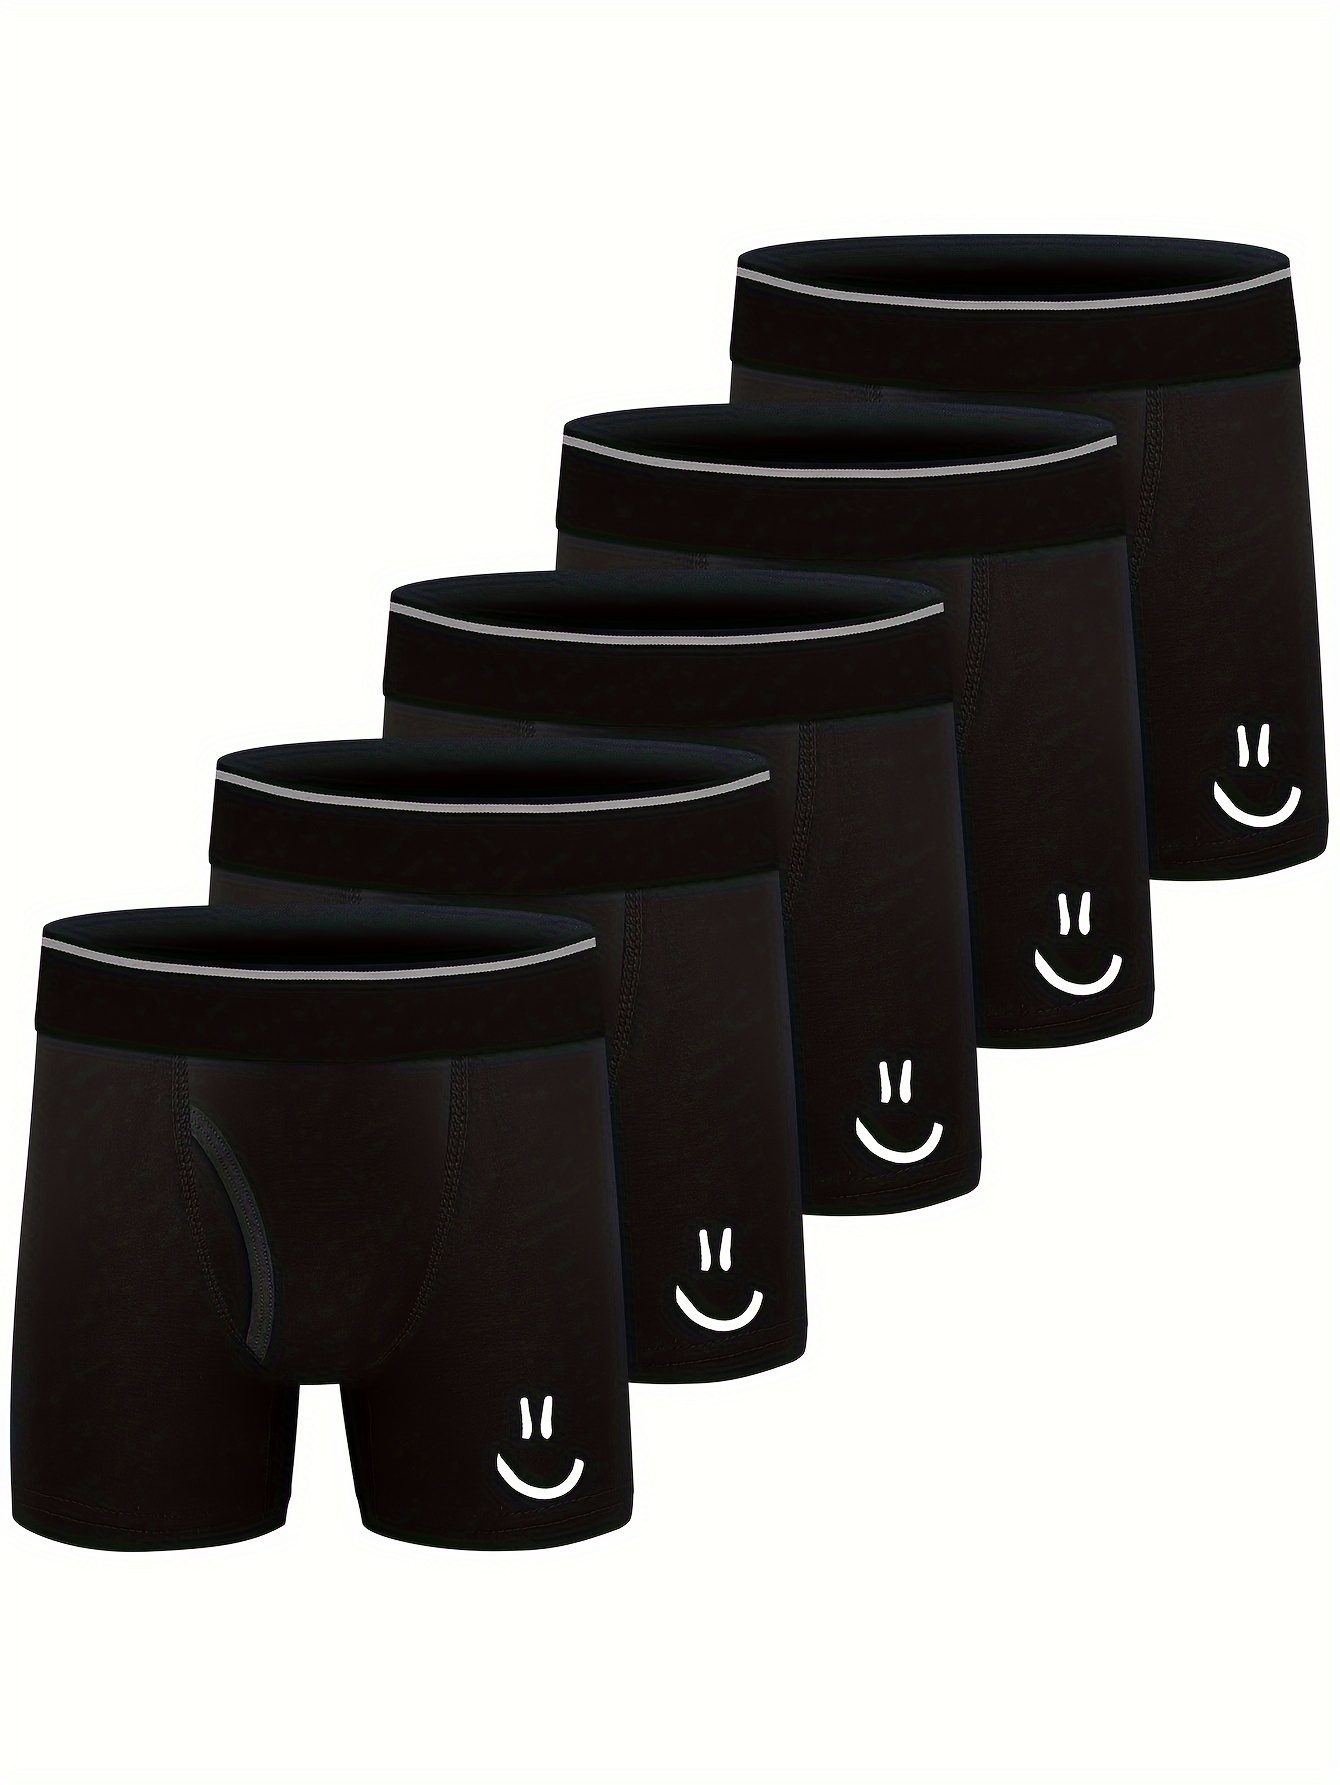 Cheap 5Pcs Kids Boys Cartoon Print Panties Comfortable Cotton Underpants